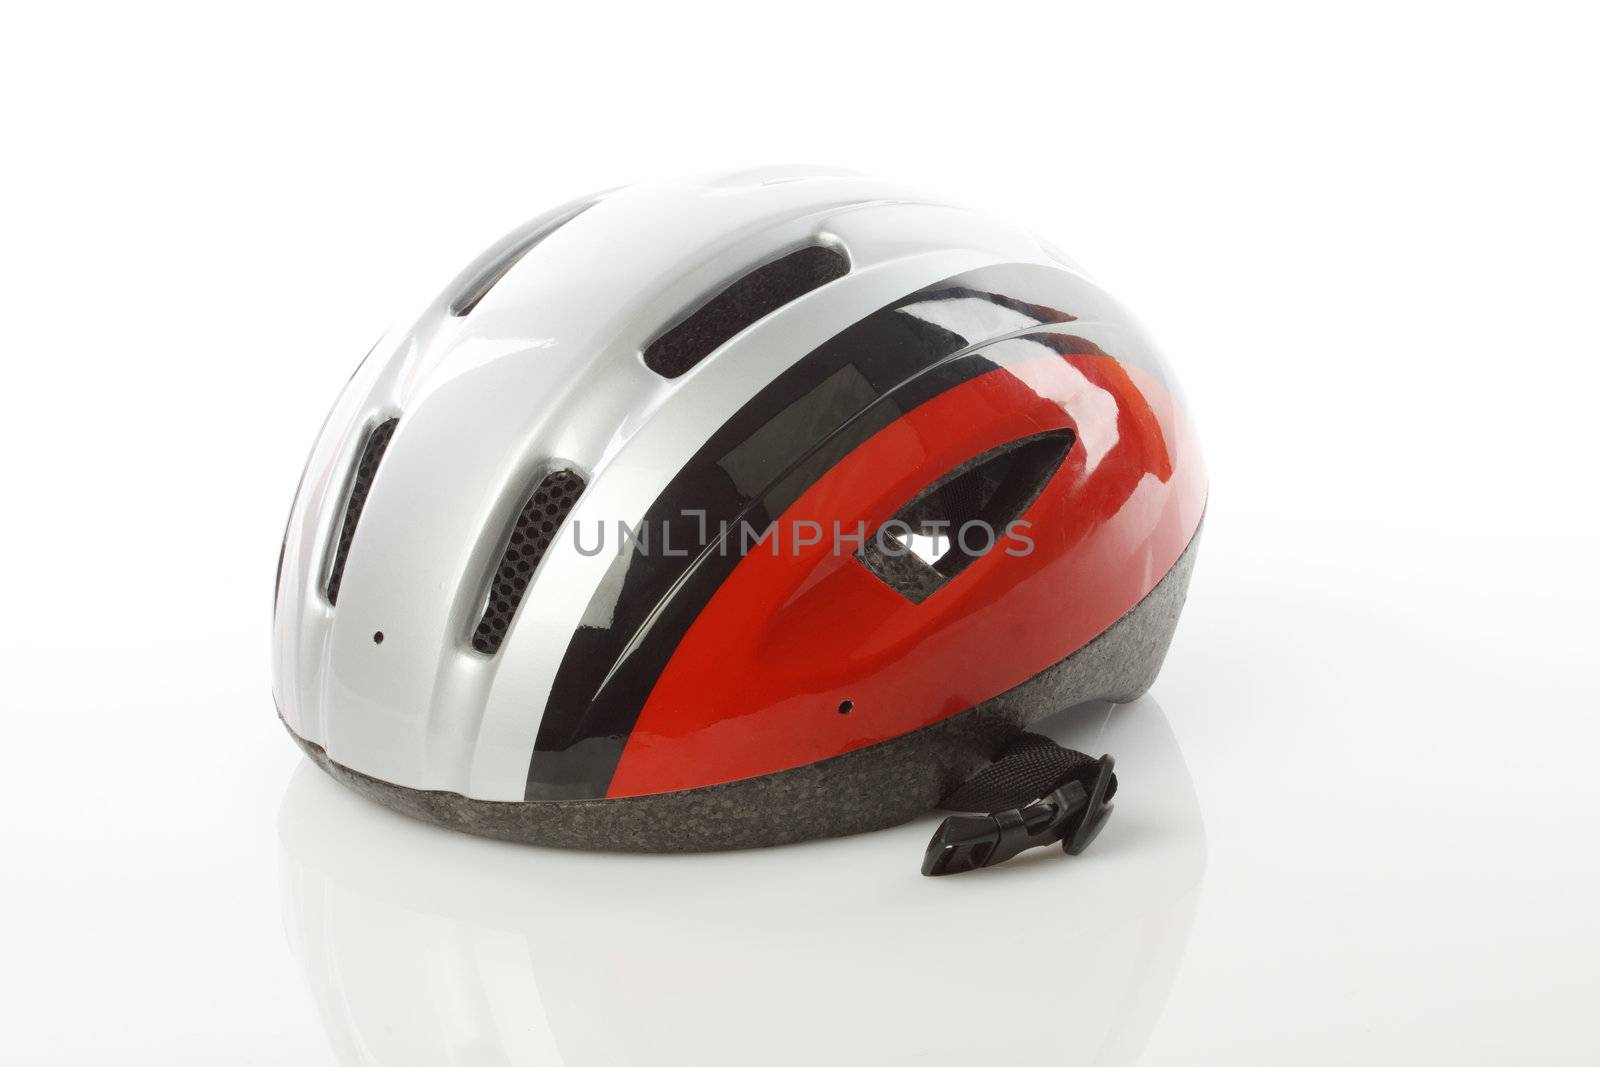 Close up of bike helmet on white background